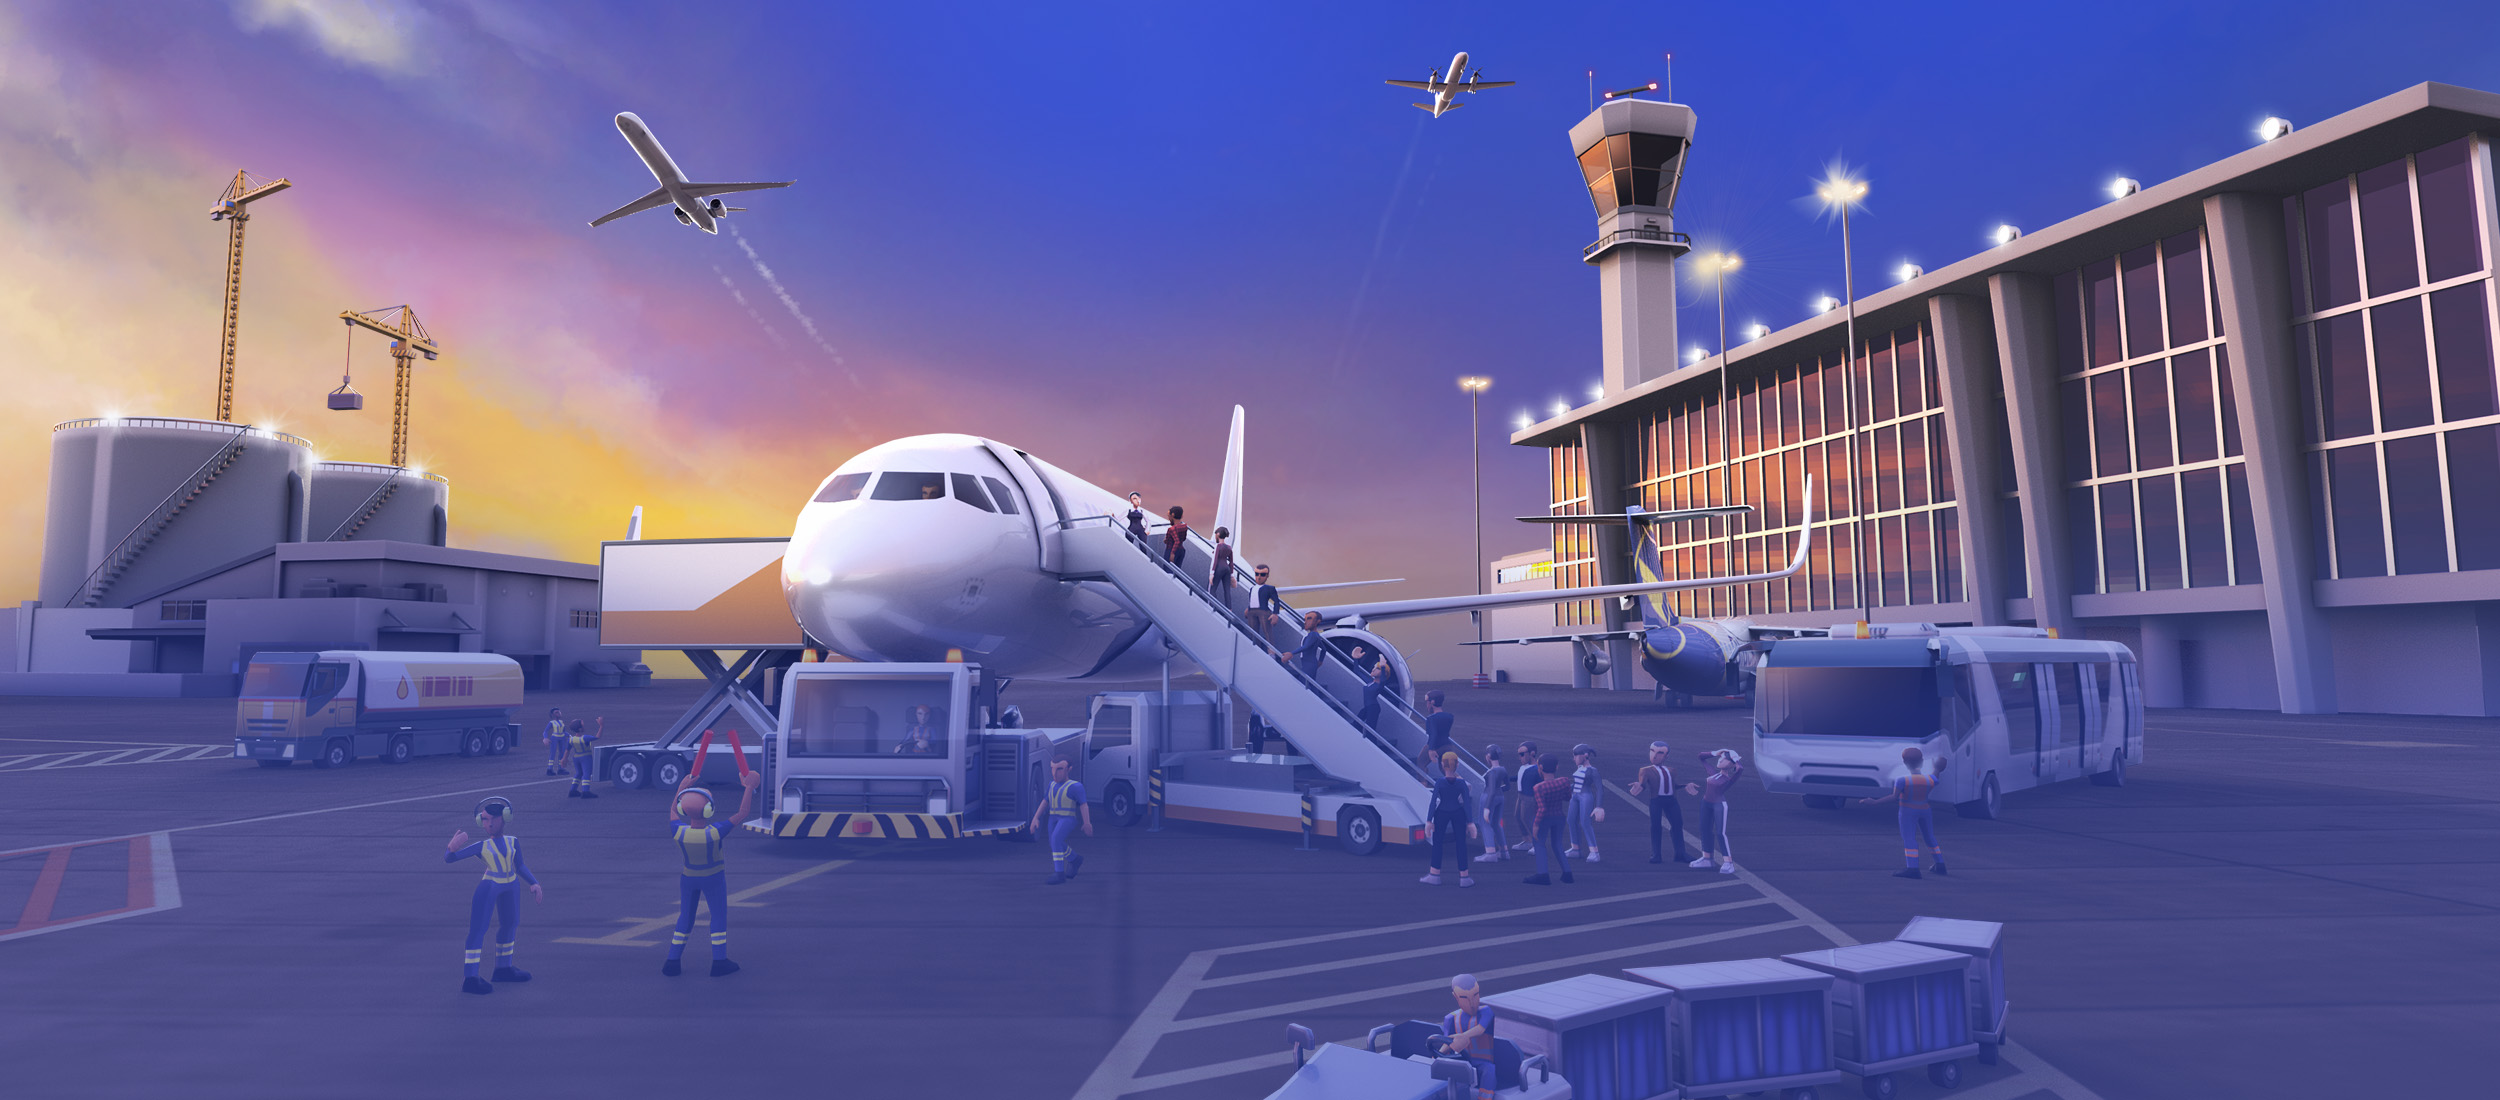 Airport-Simulator 2019 PS4 PLAYSTATION 4 New+Boxed